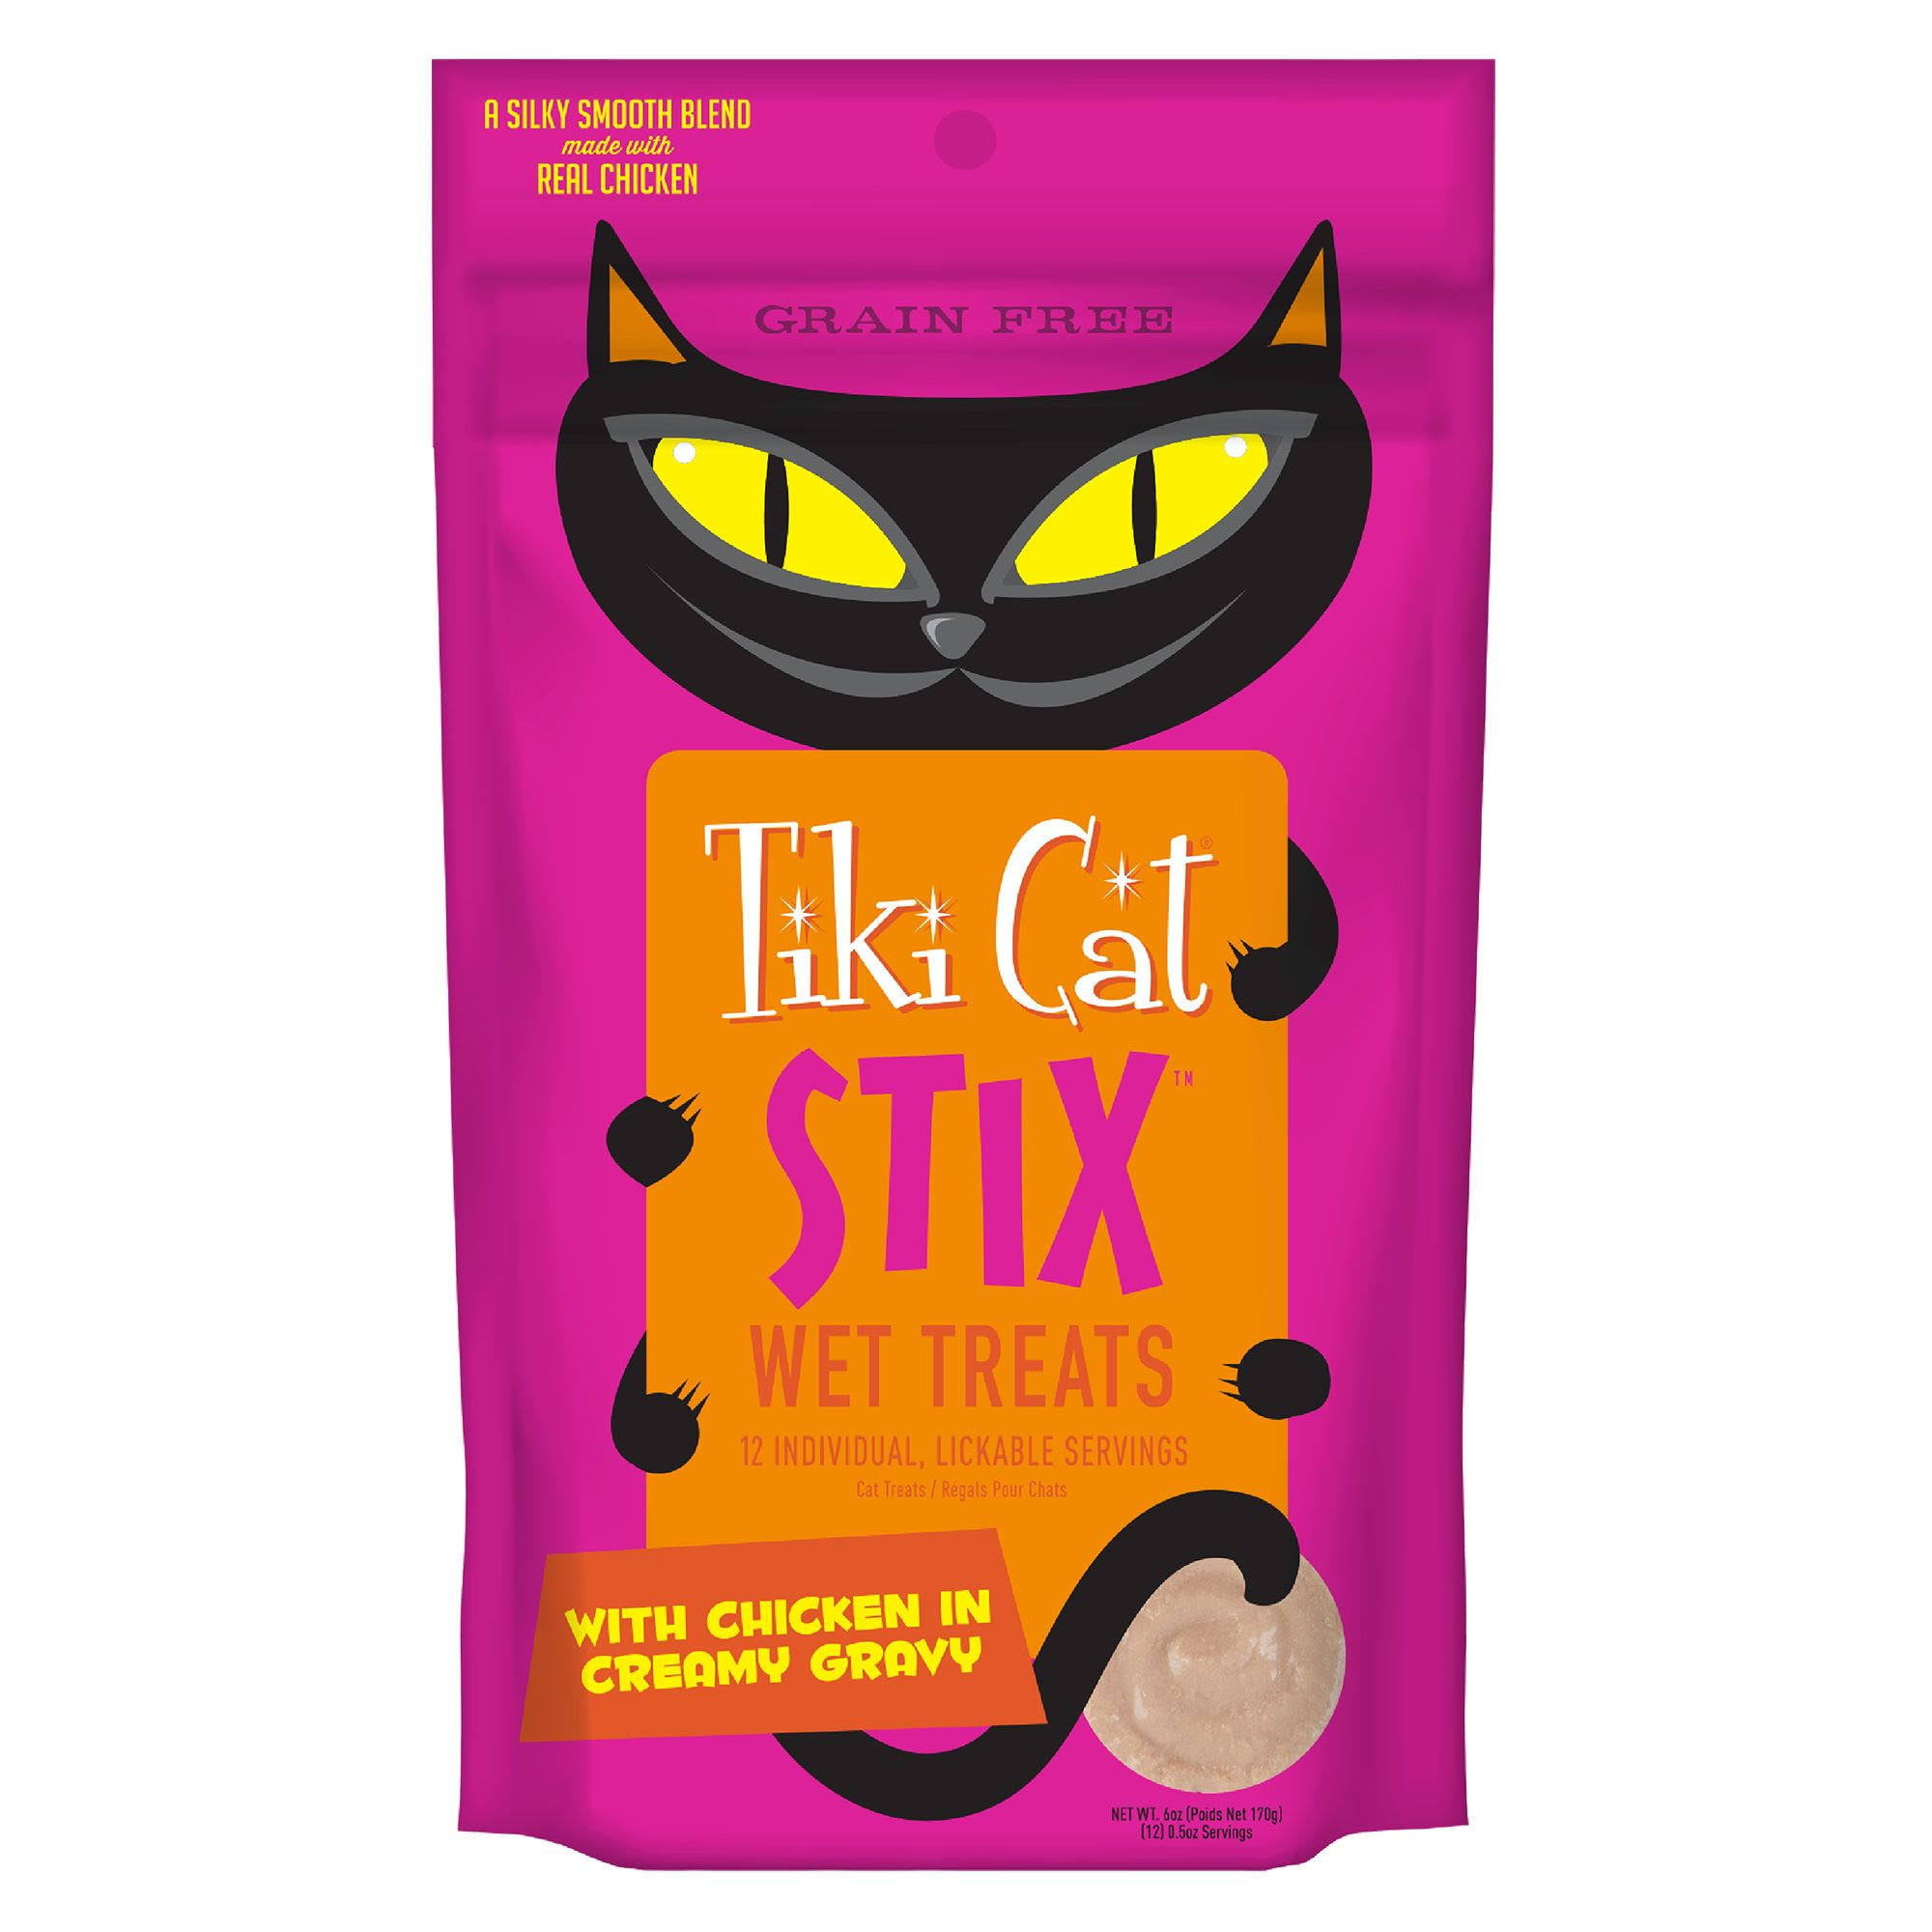 Tiki Cat Stix Chicken Mousse Grain Free Cat Food Treats 6 oz, Pack of 12